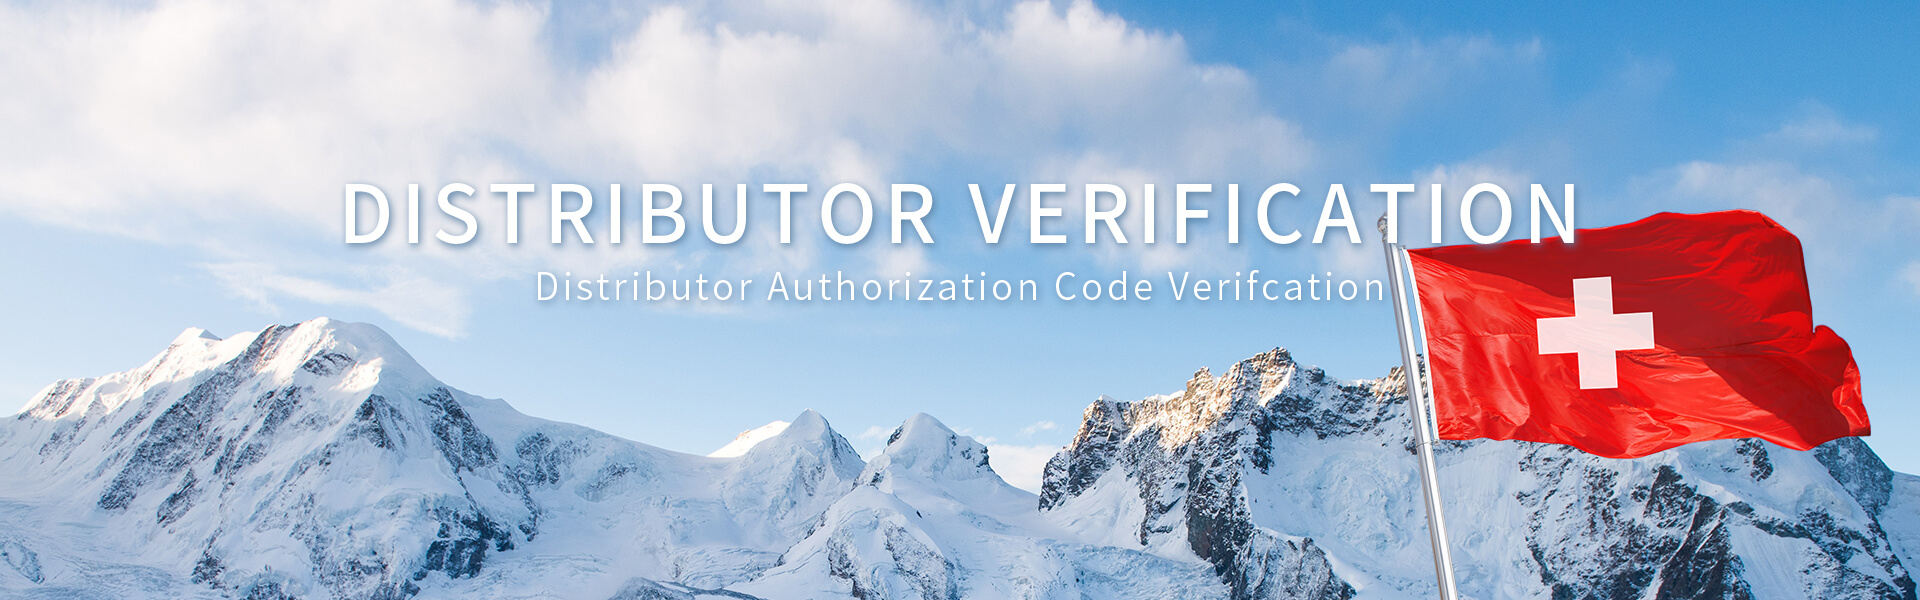 Distributor Authorization Code Verification